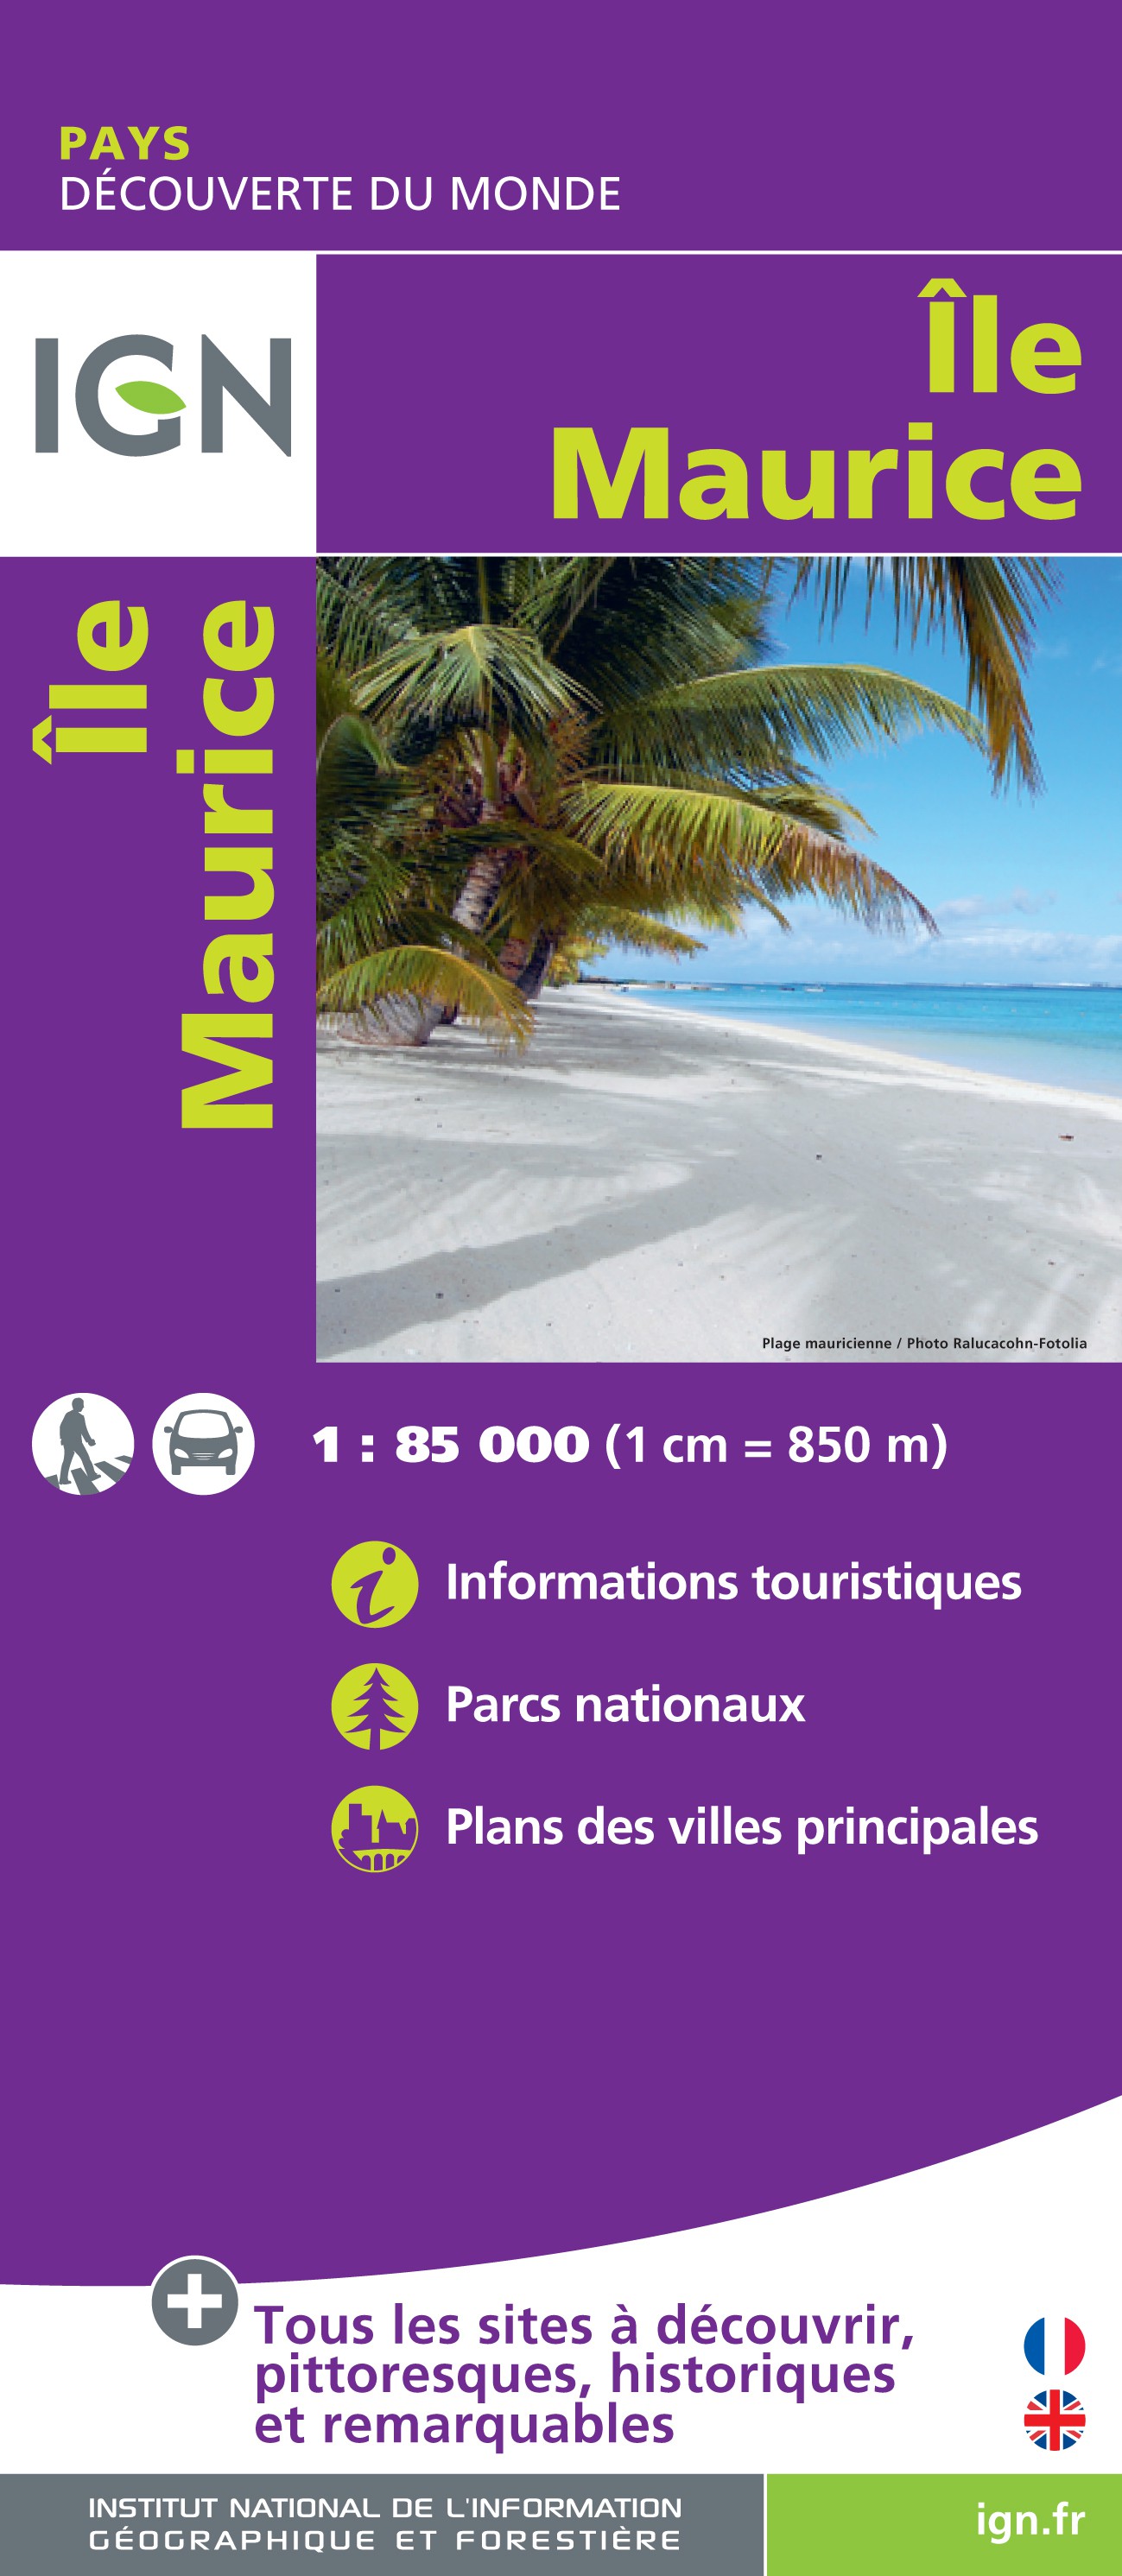 Online bestellen: Wegenkaart - landkaart Mauritius - île Maurice | IGN - Institut Géographique National